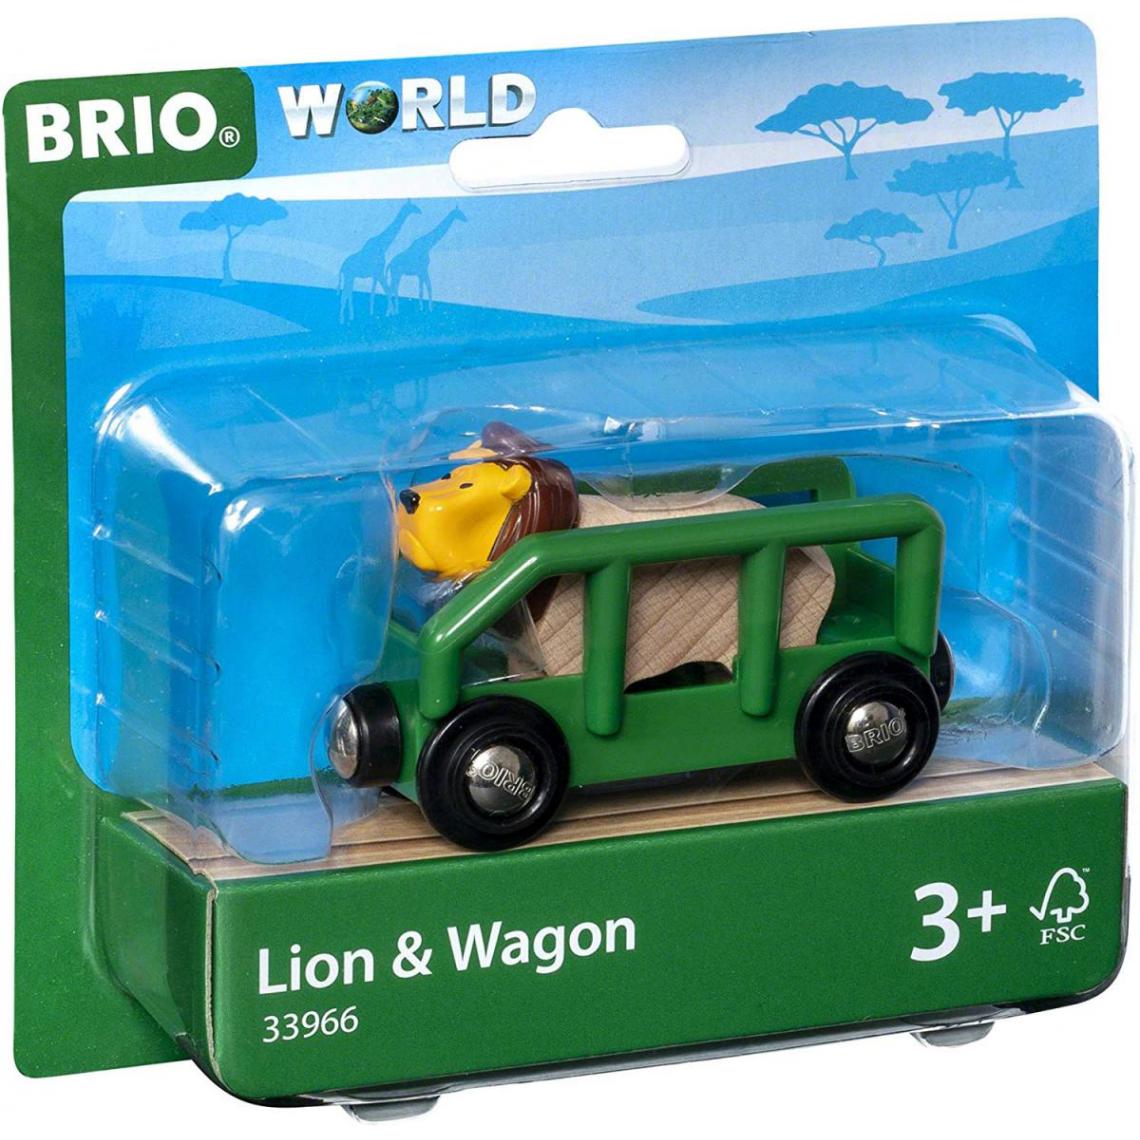 BRIO - Brio 33966 Wagon et lion - Voitures